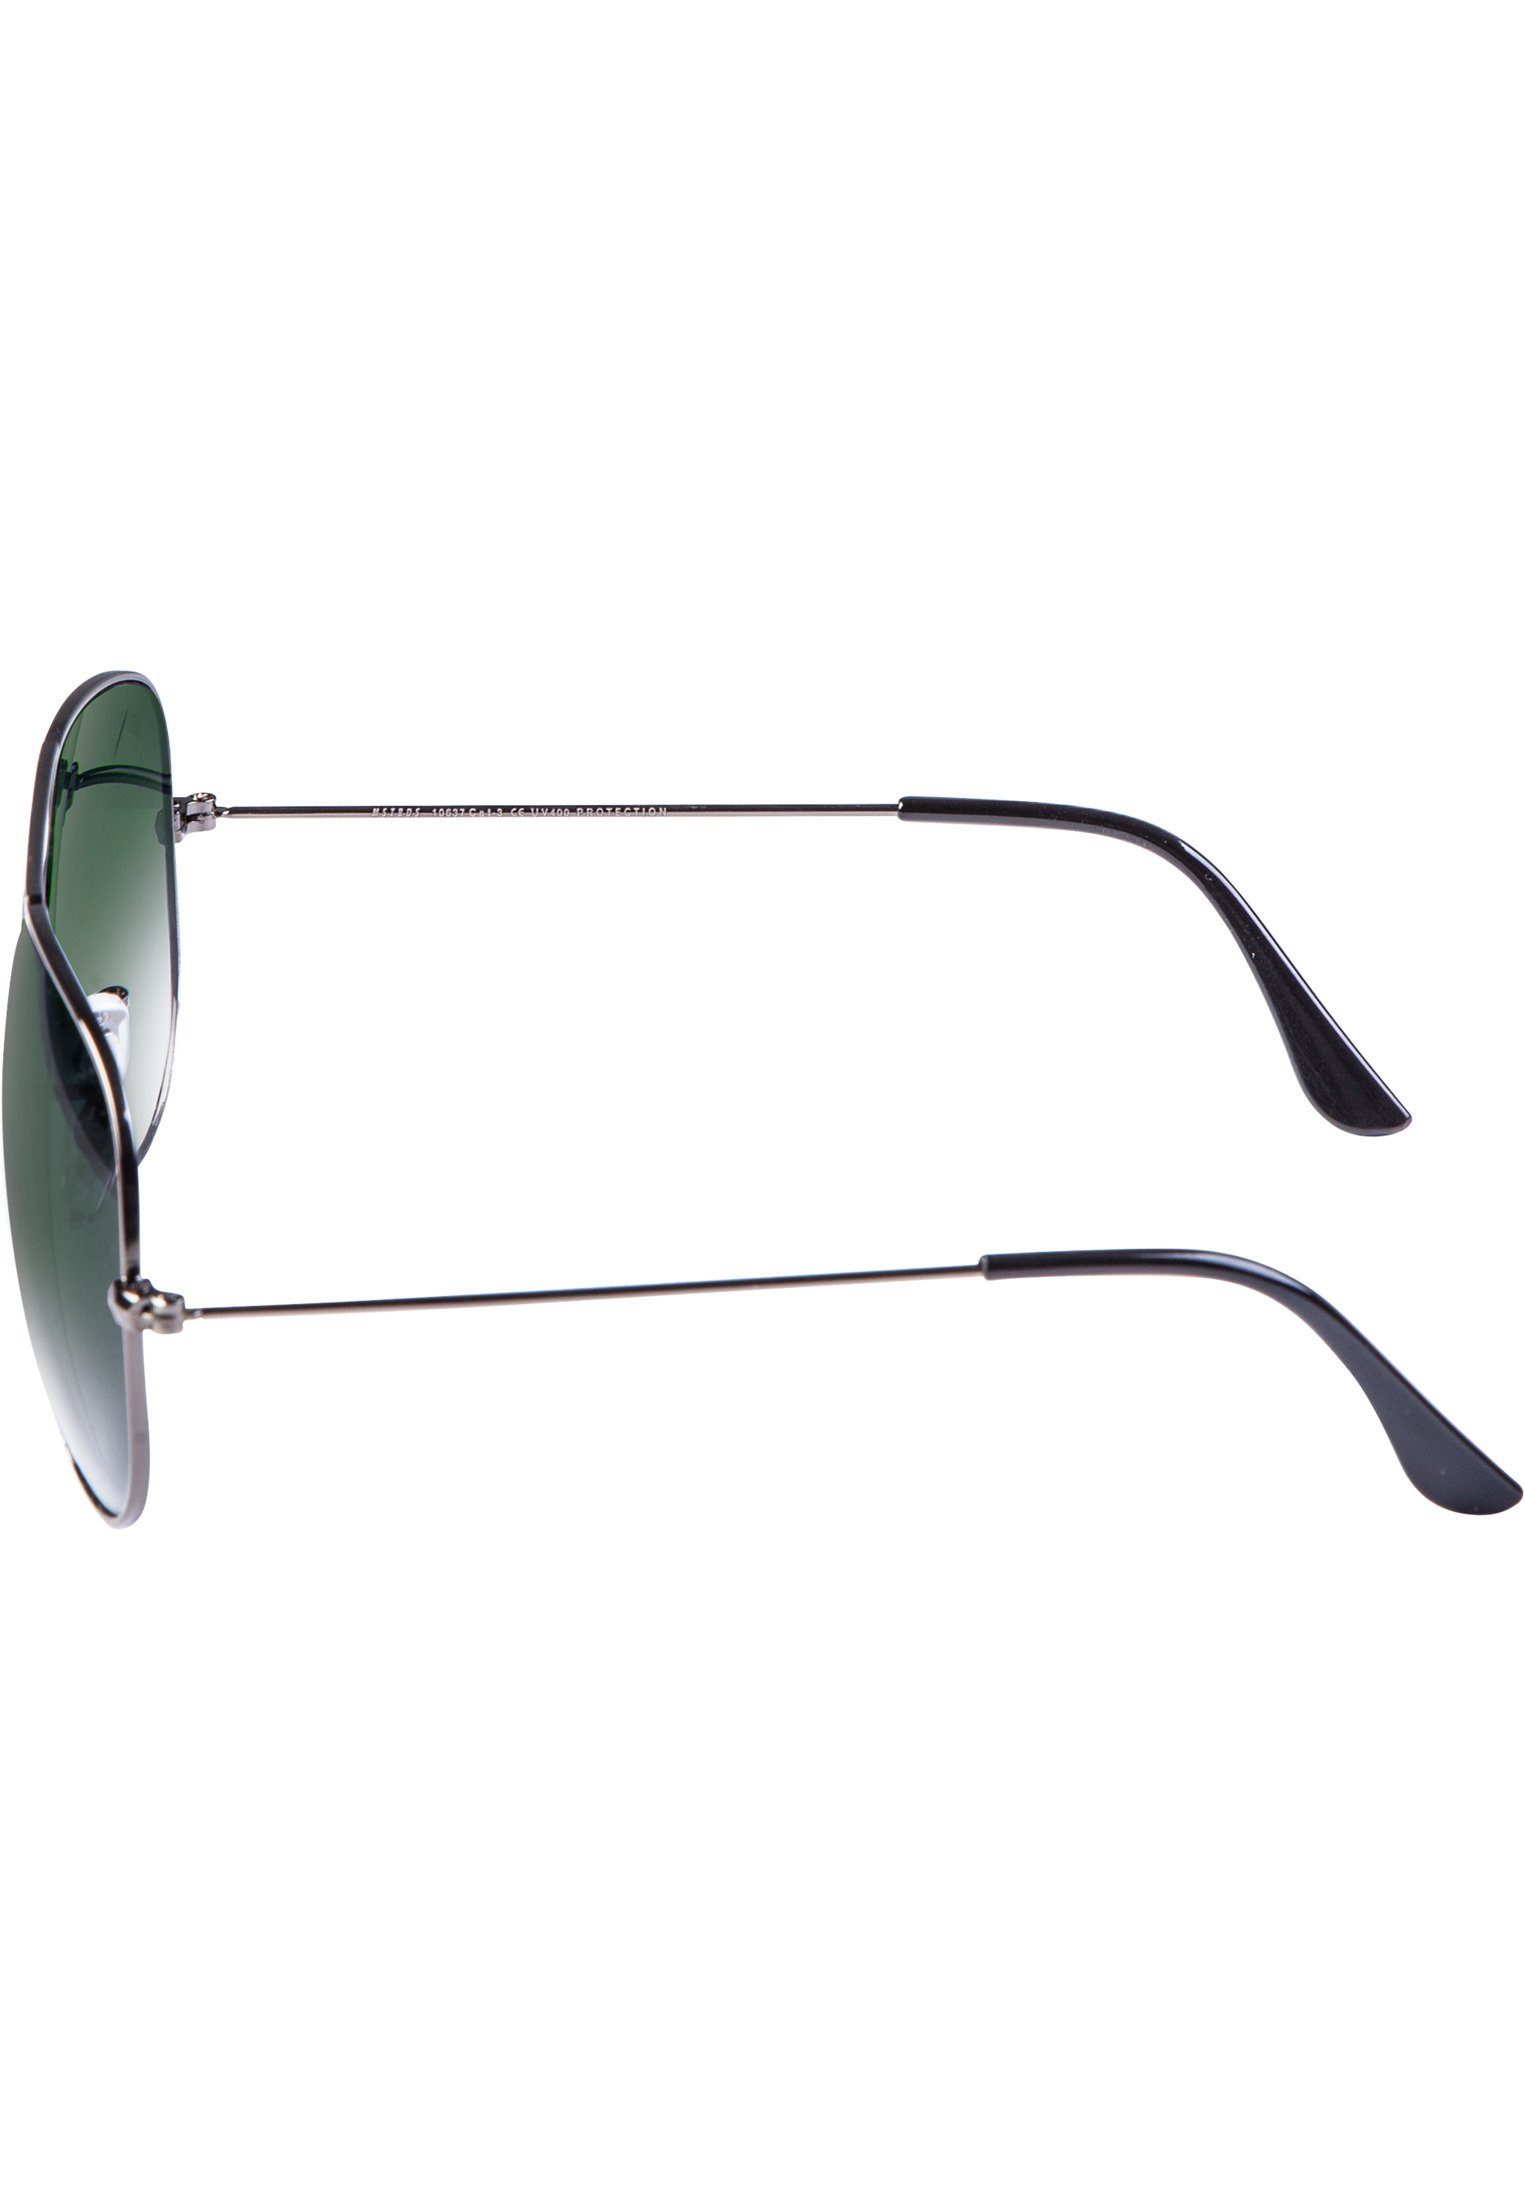 MSTRDS PureAv Sunglasses Accessoires Youth gun/green Sonnenbrille